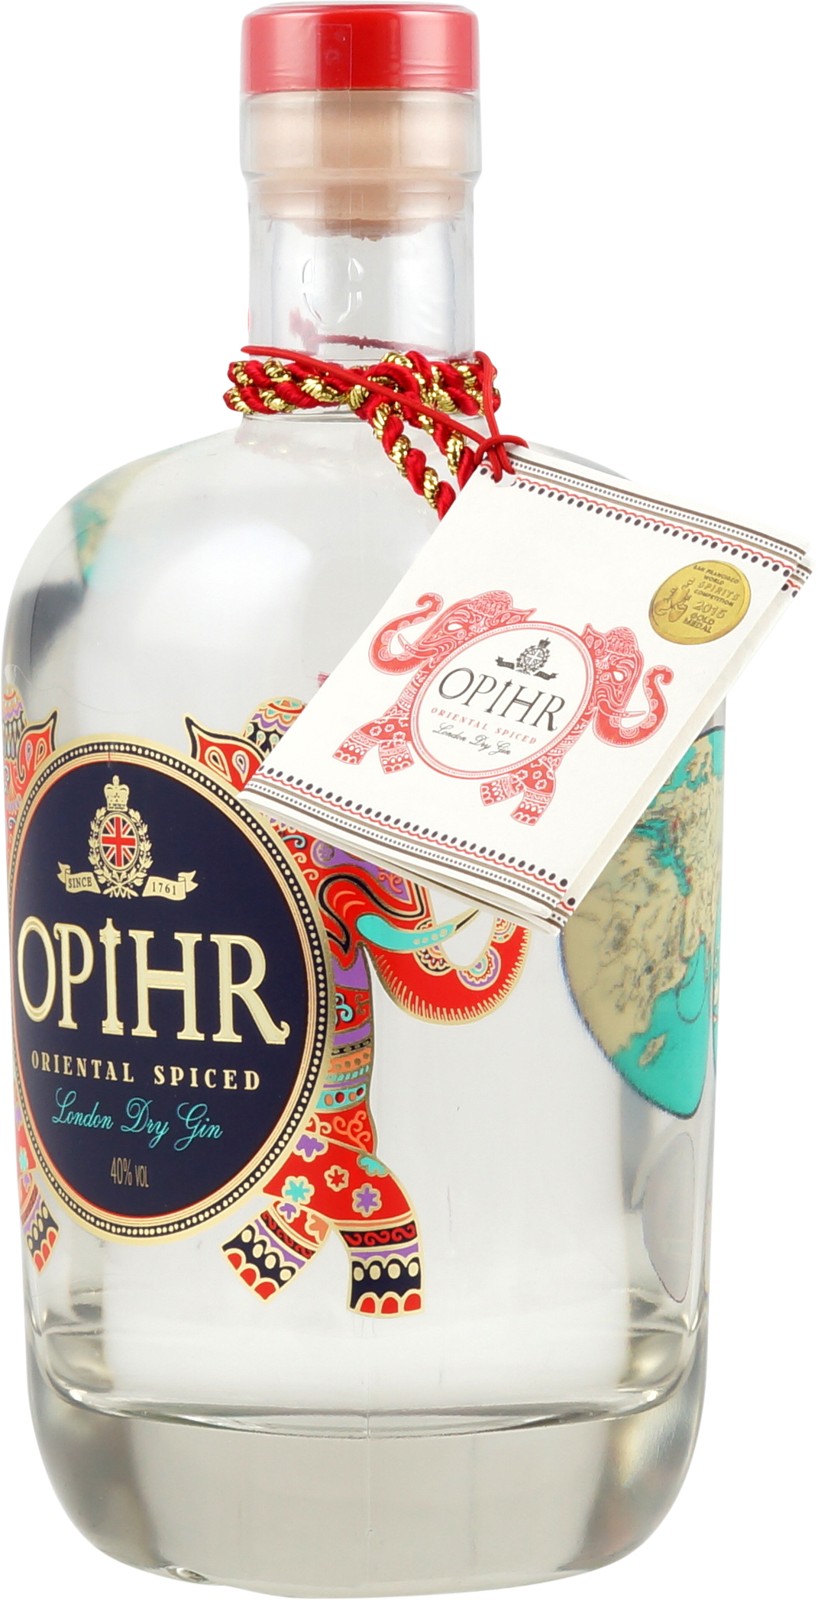 London Oriental Shop Spiced Gin Opihr Dry im